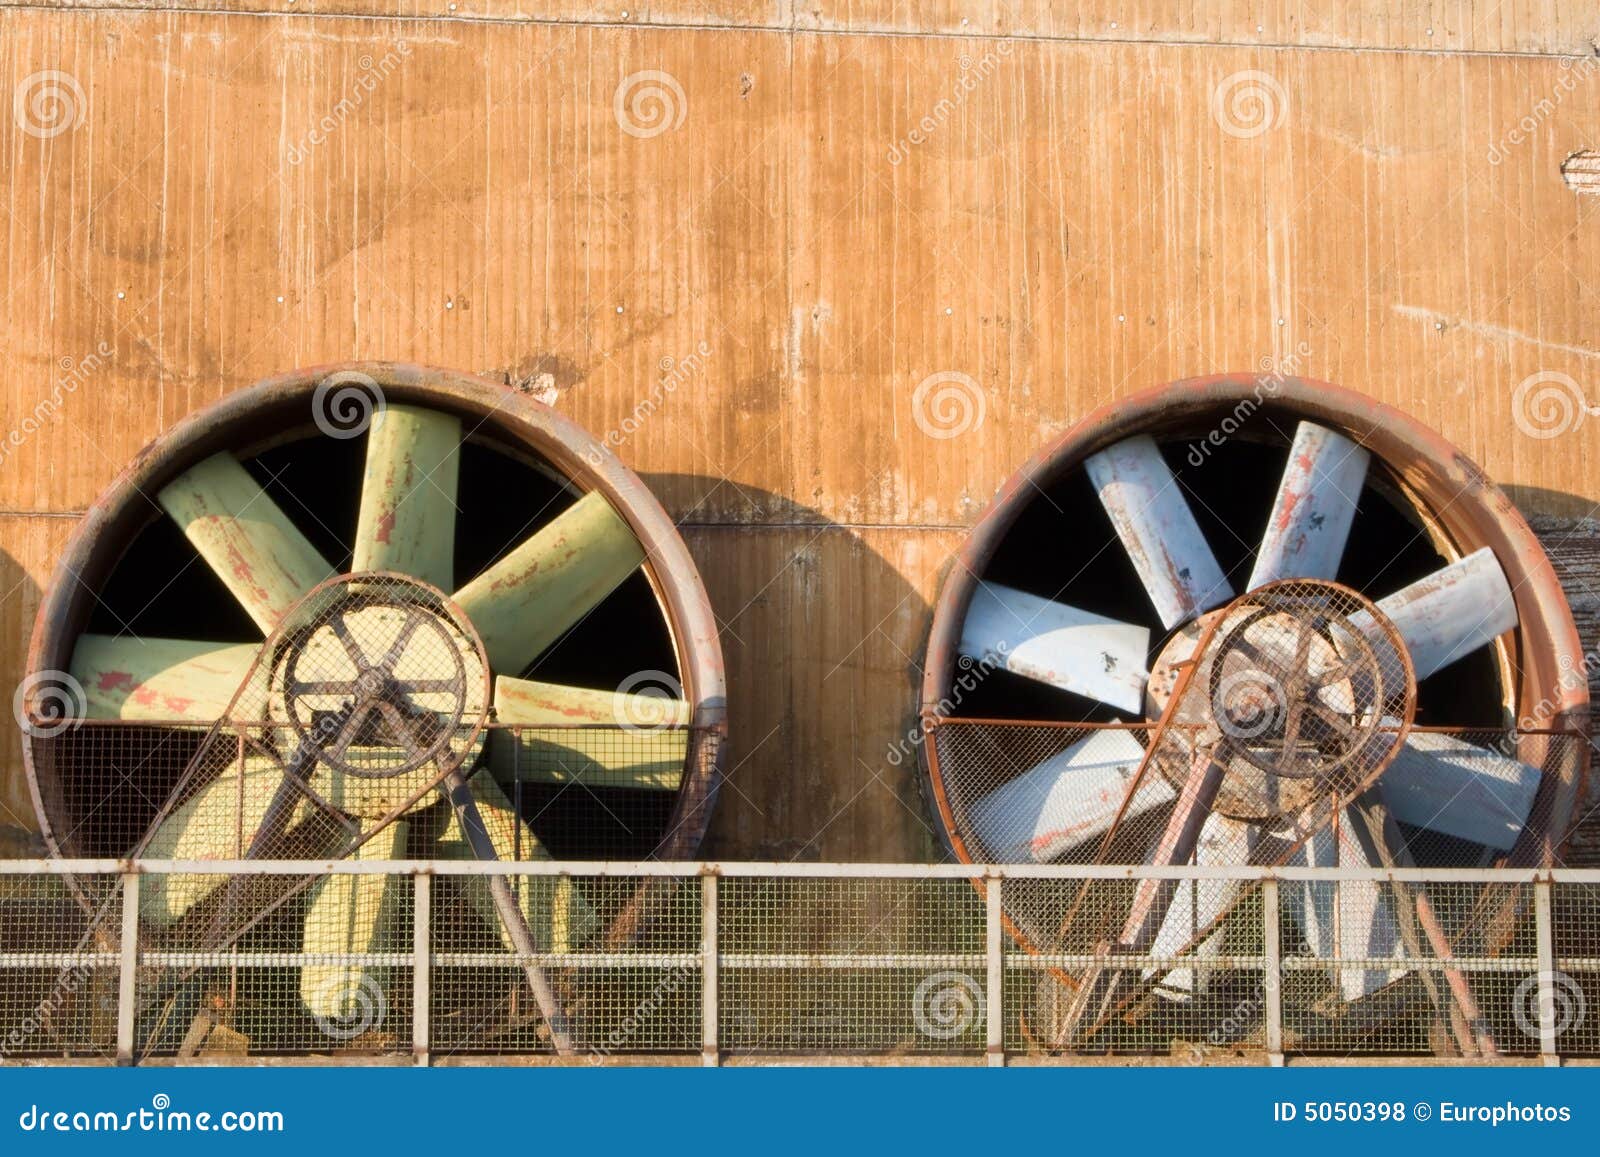 obsolete industrial turbines